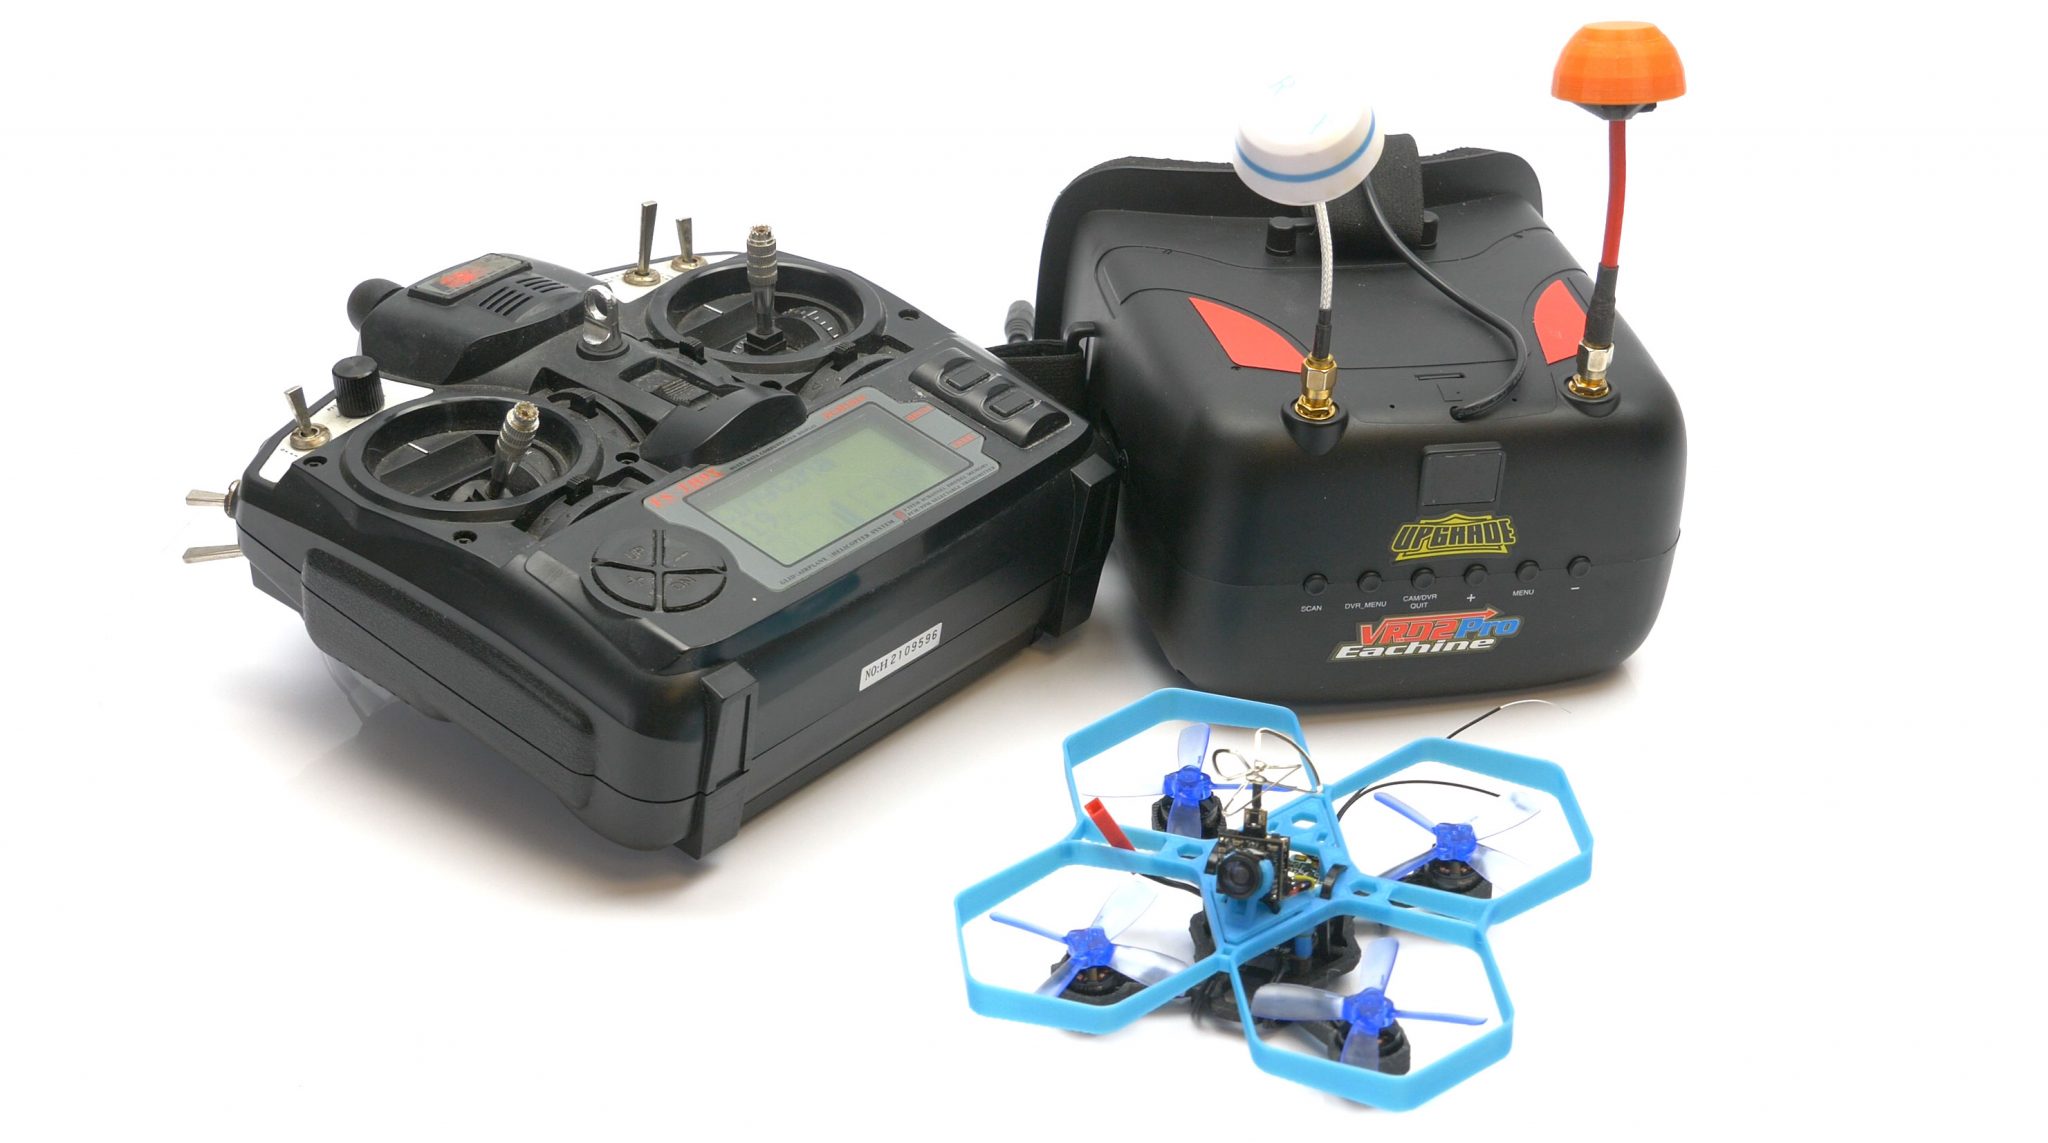 How a cool & cheap 3D printed drone - Original Prusa 3D Printers